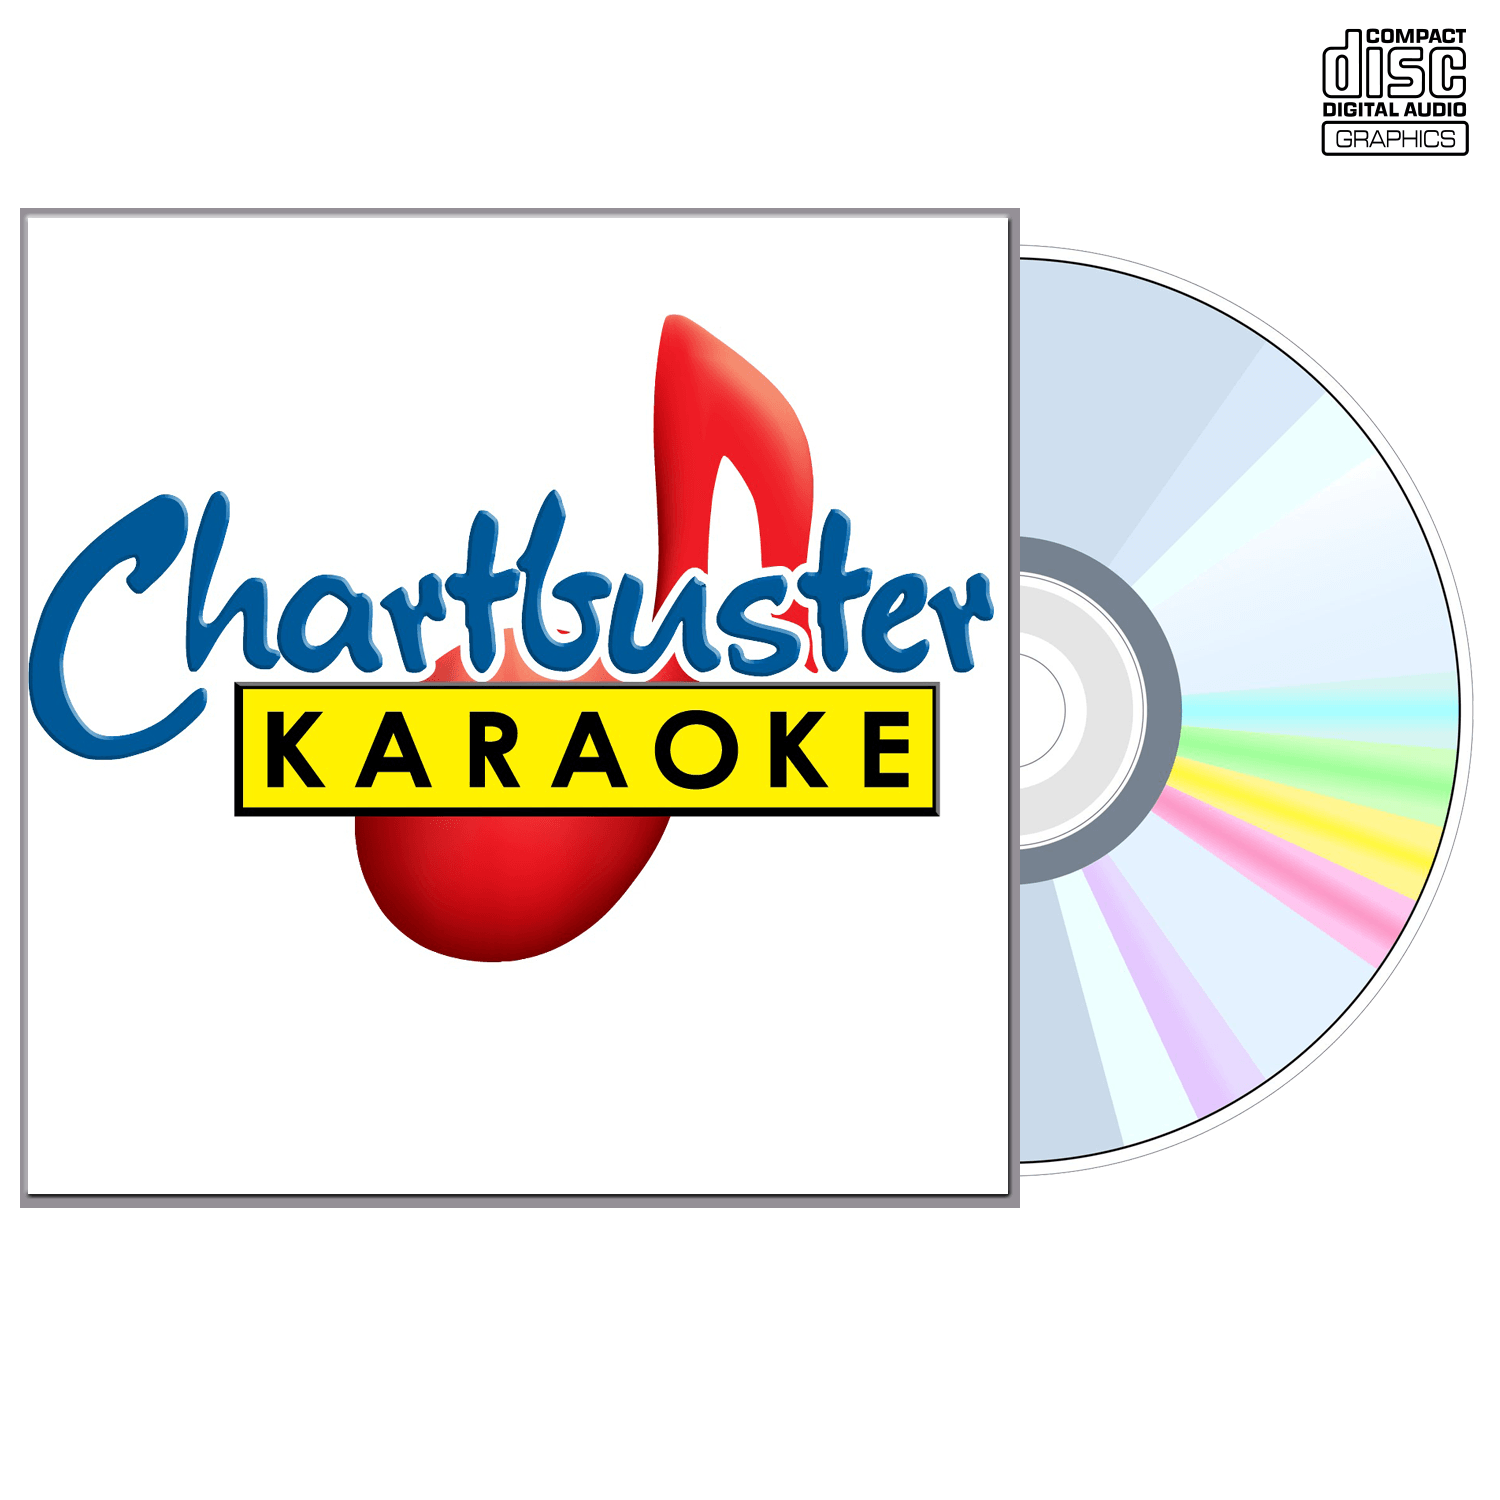 Best Of Doug Stone - CD+G - Chartbuster Karaoke - Karaoke Home Entertainment